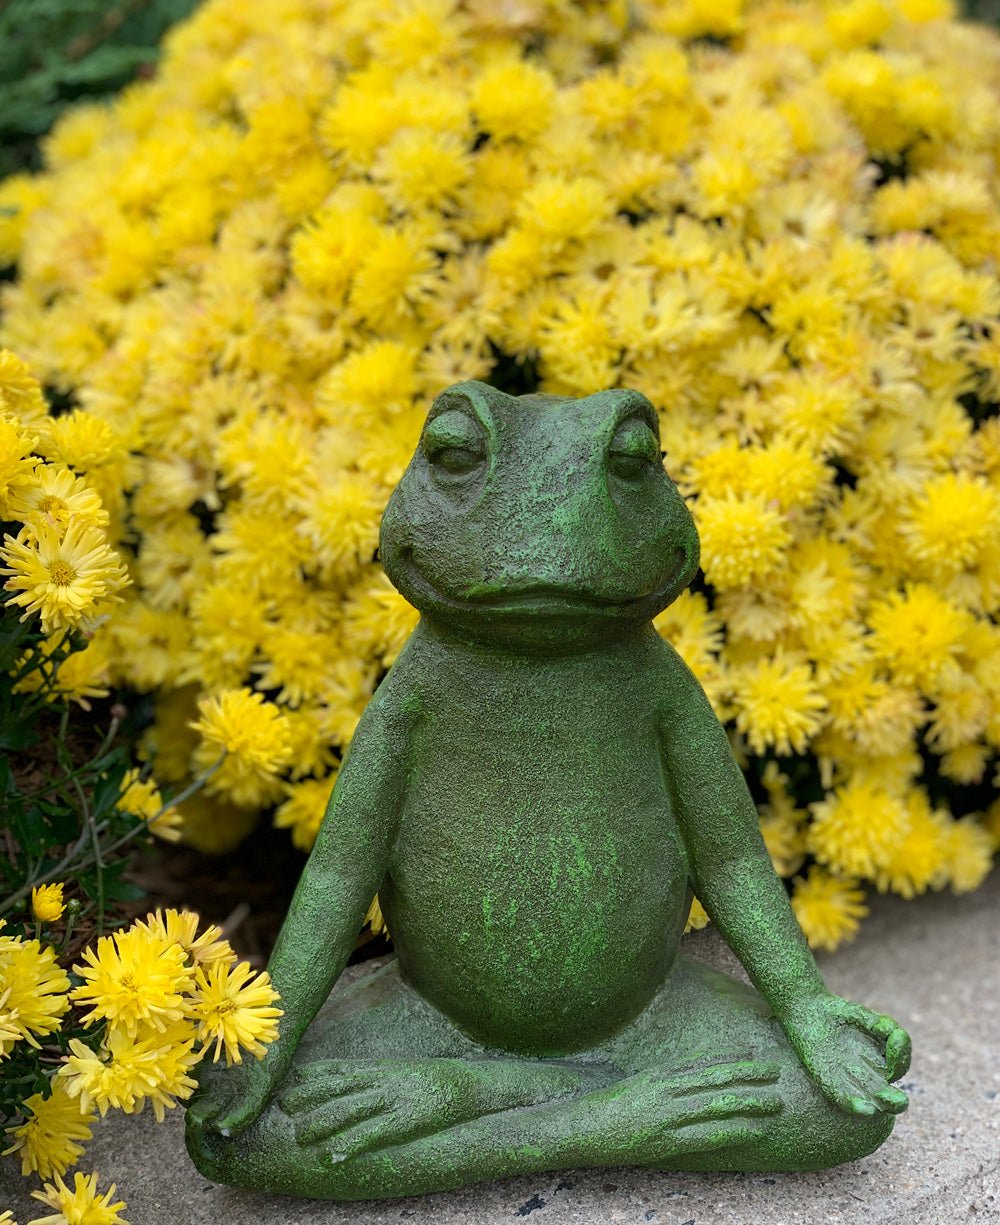 Handcrafted Metal Yoga Frog Sculpture